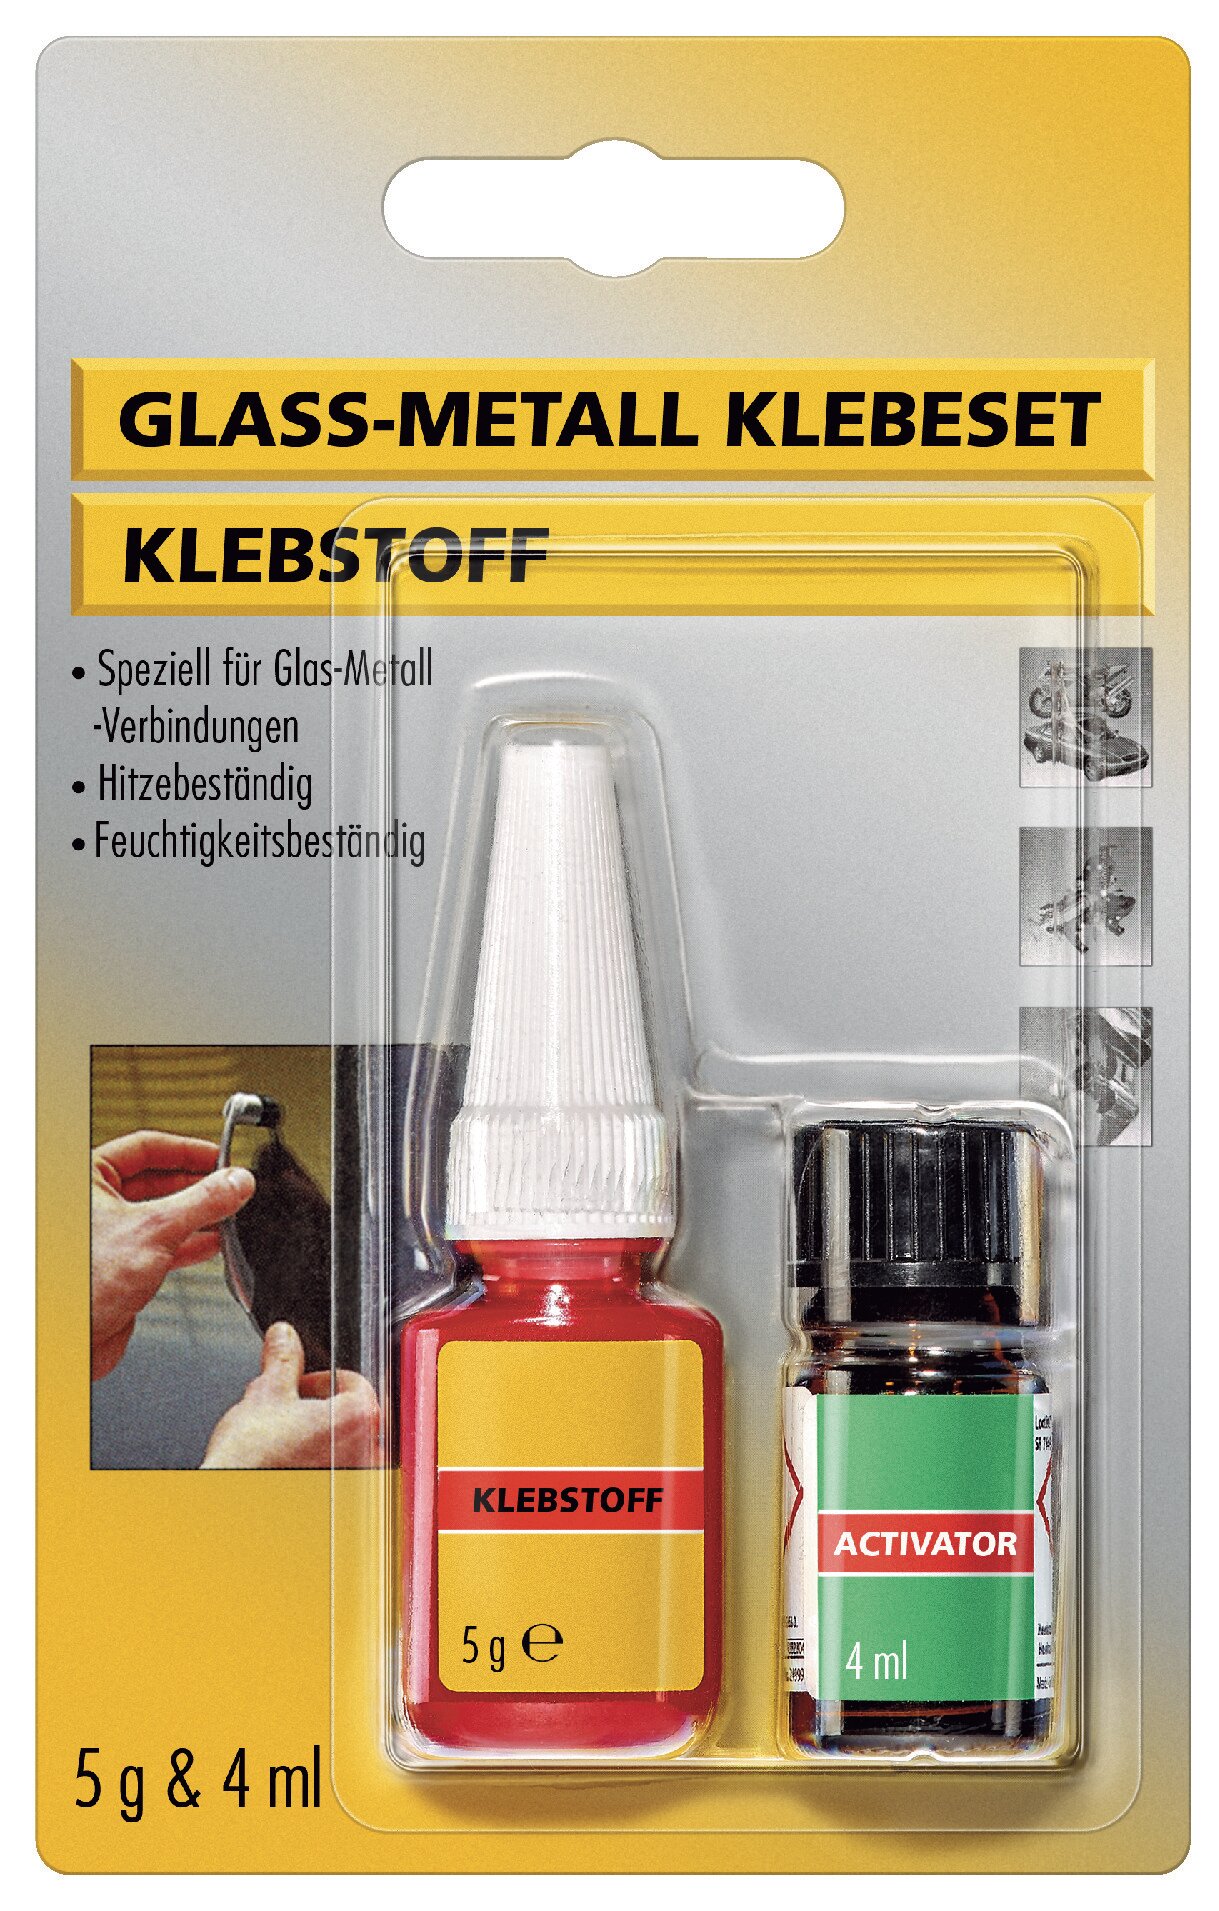 Keep Close Klebeset